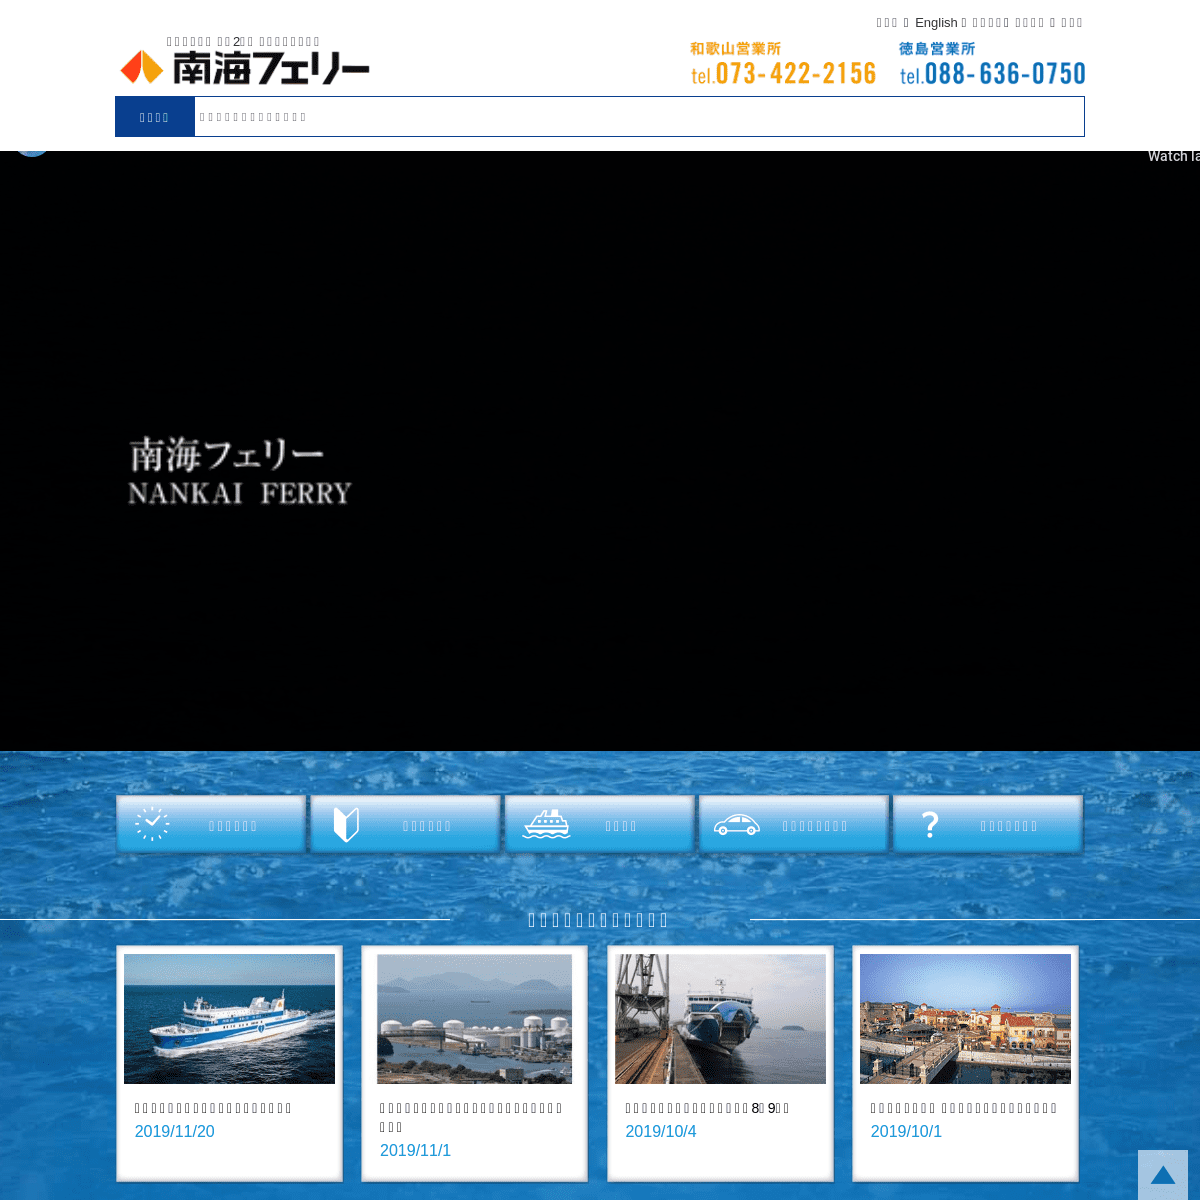 A complete backup of nankai-ferry.co.jp